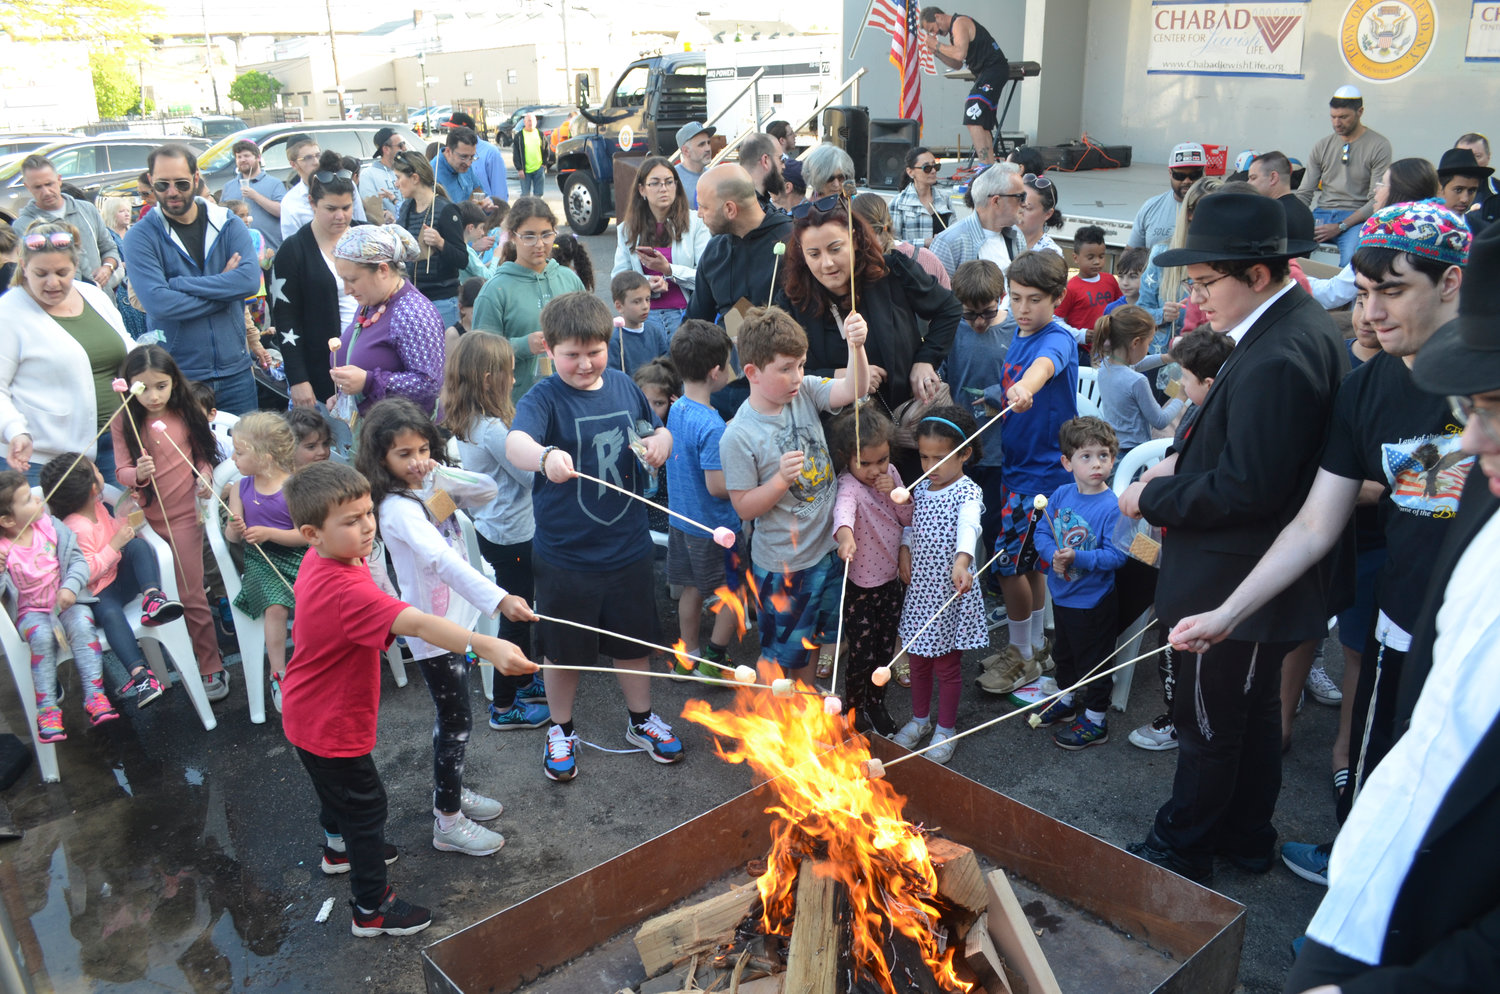 The community gathered around the bonfire to roast marshmallows.